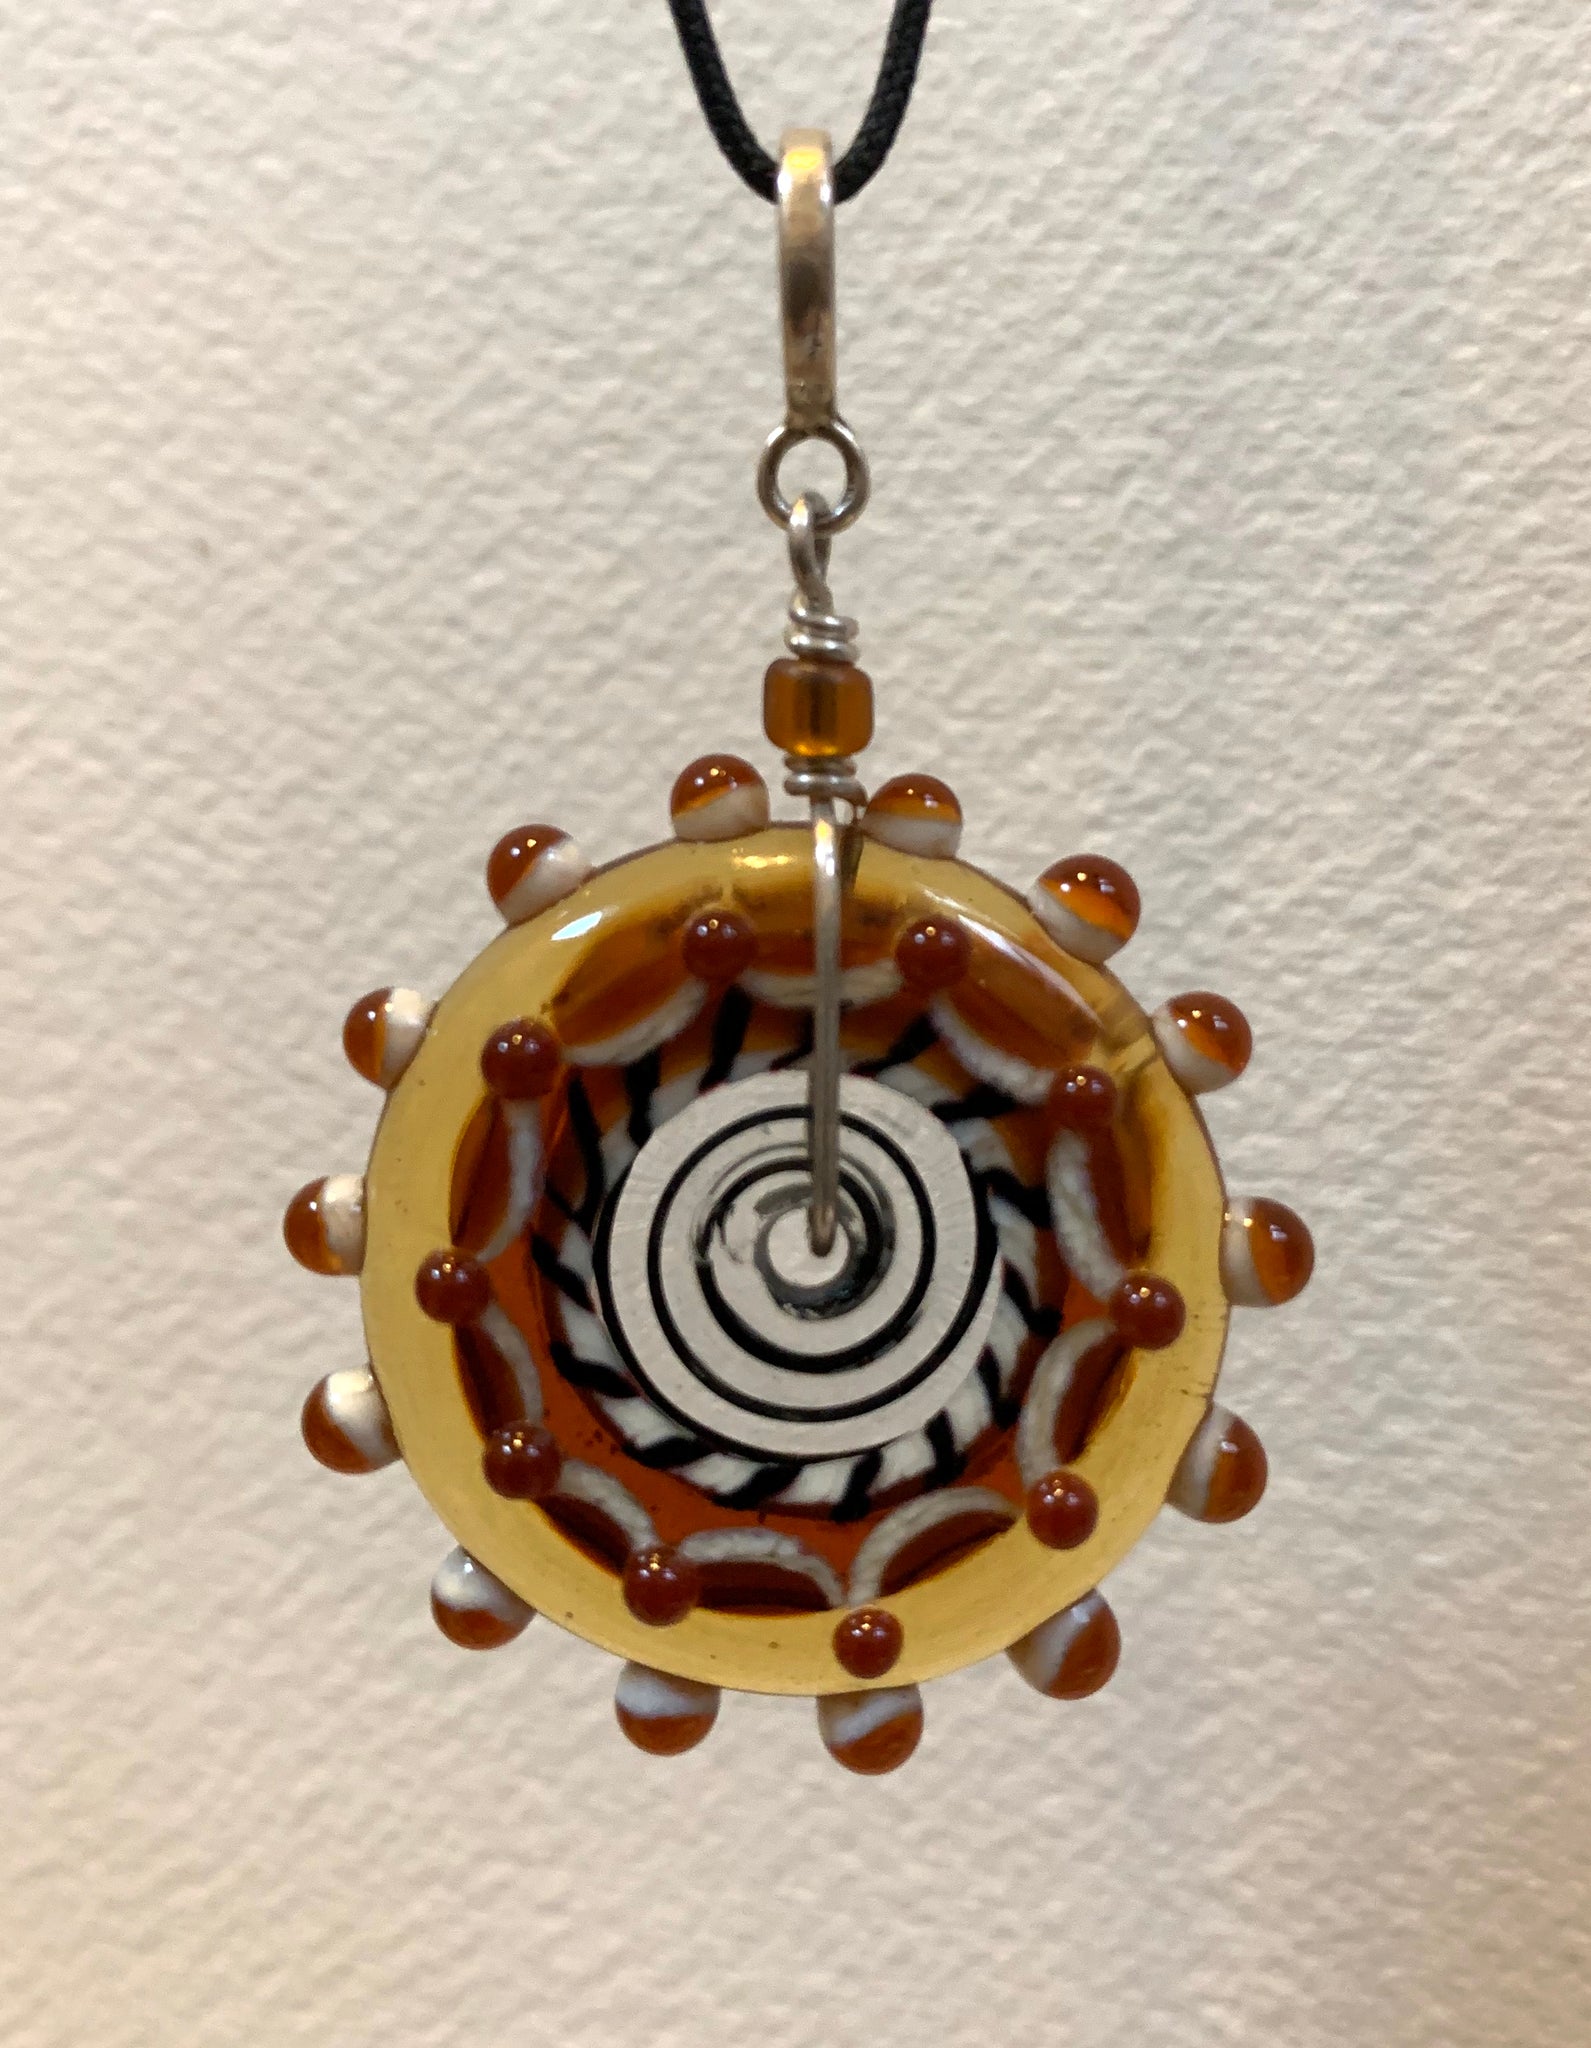 Disc bead pendant amber/brown